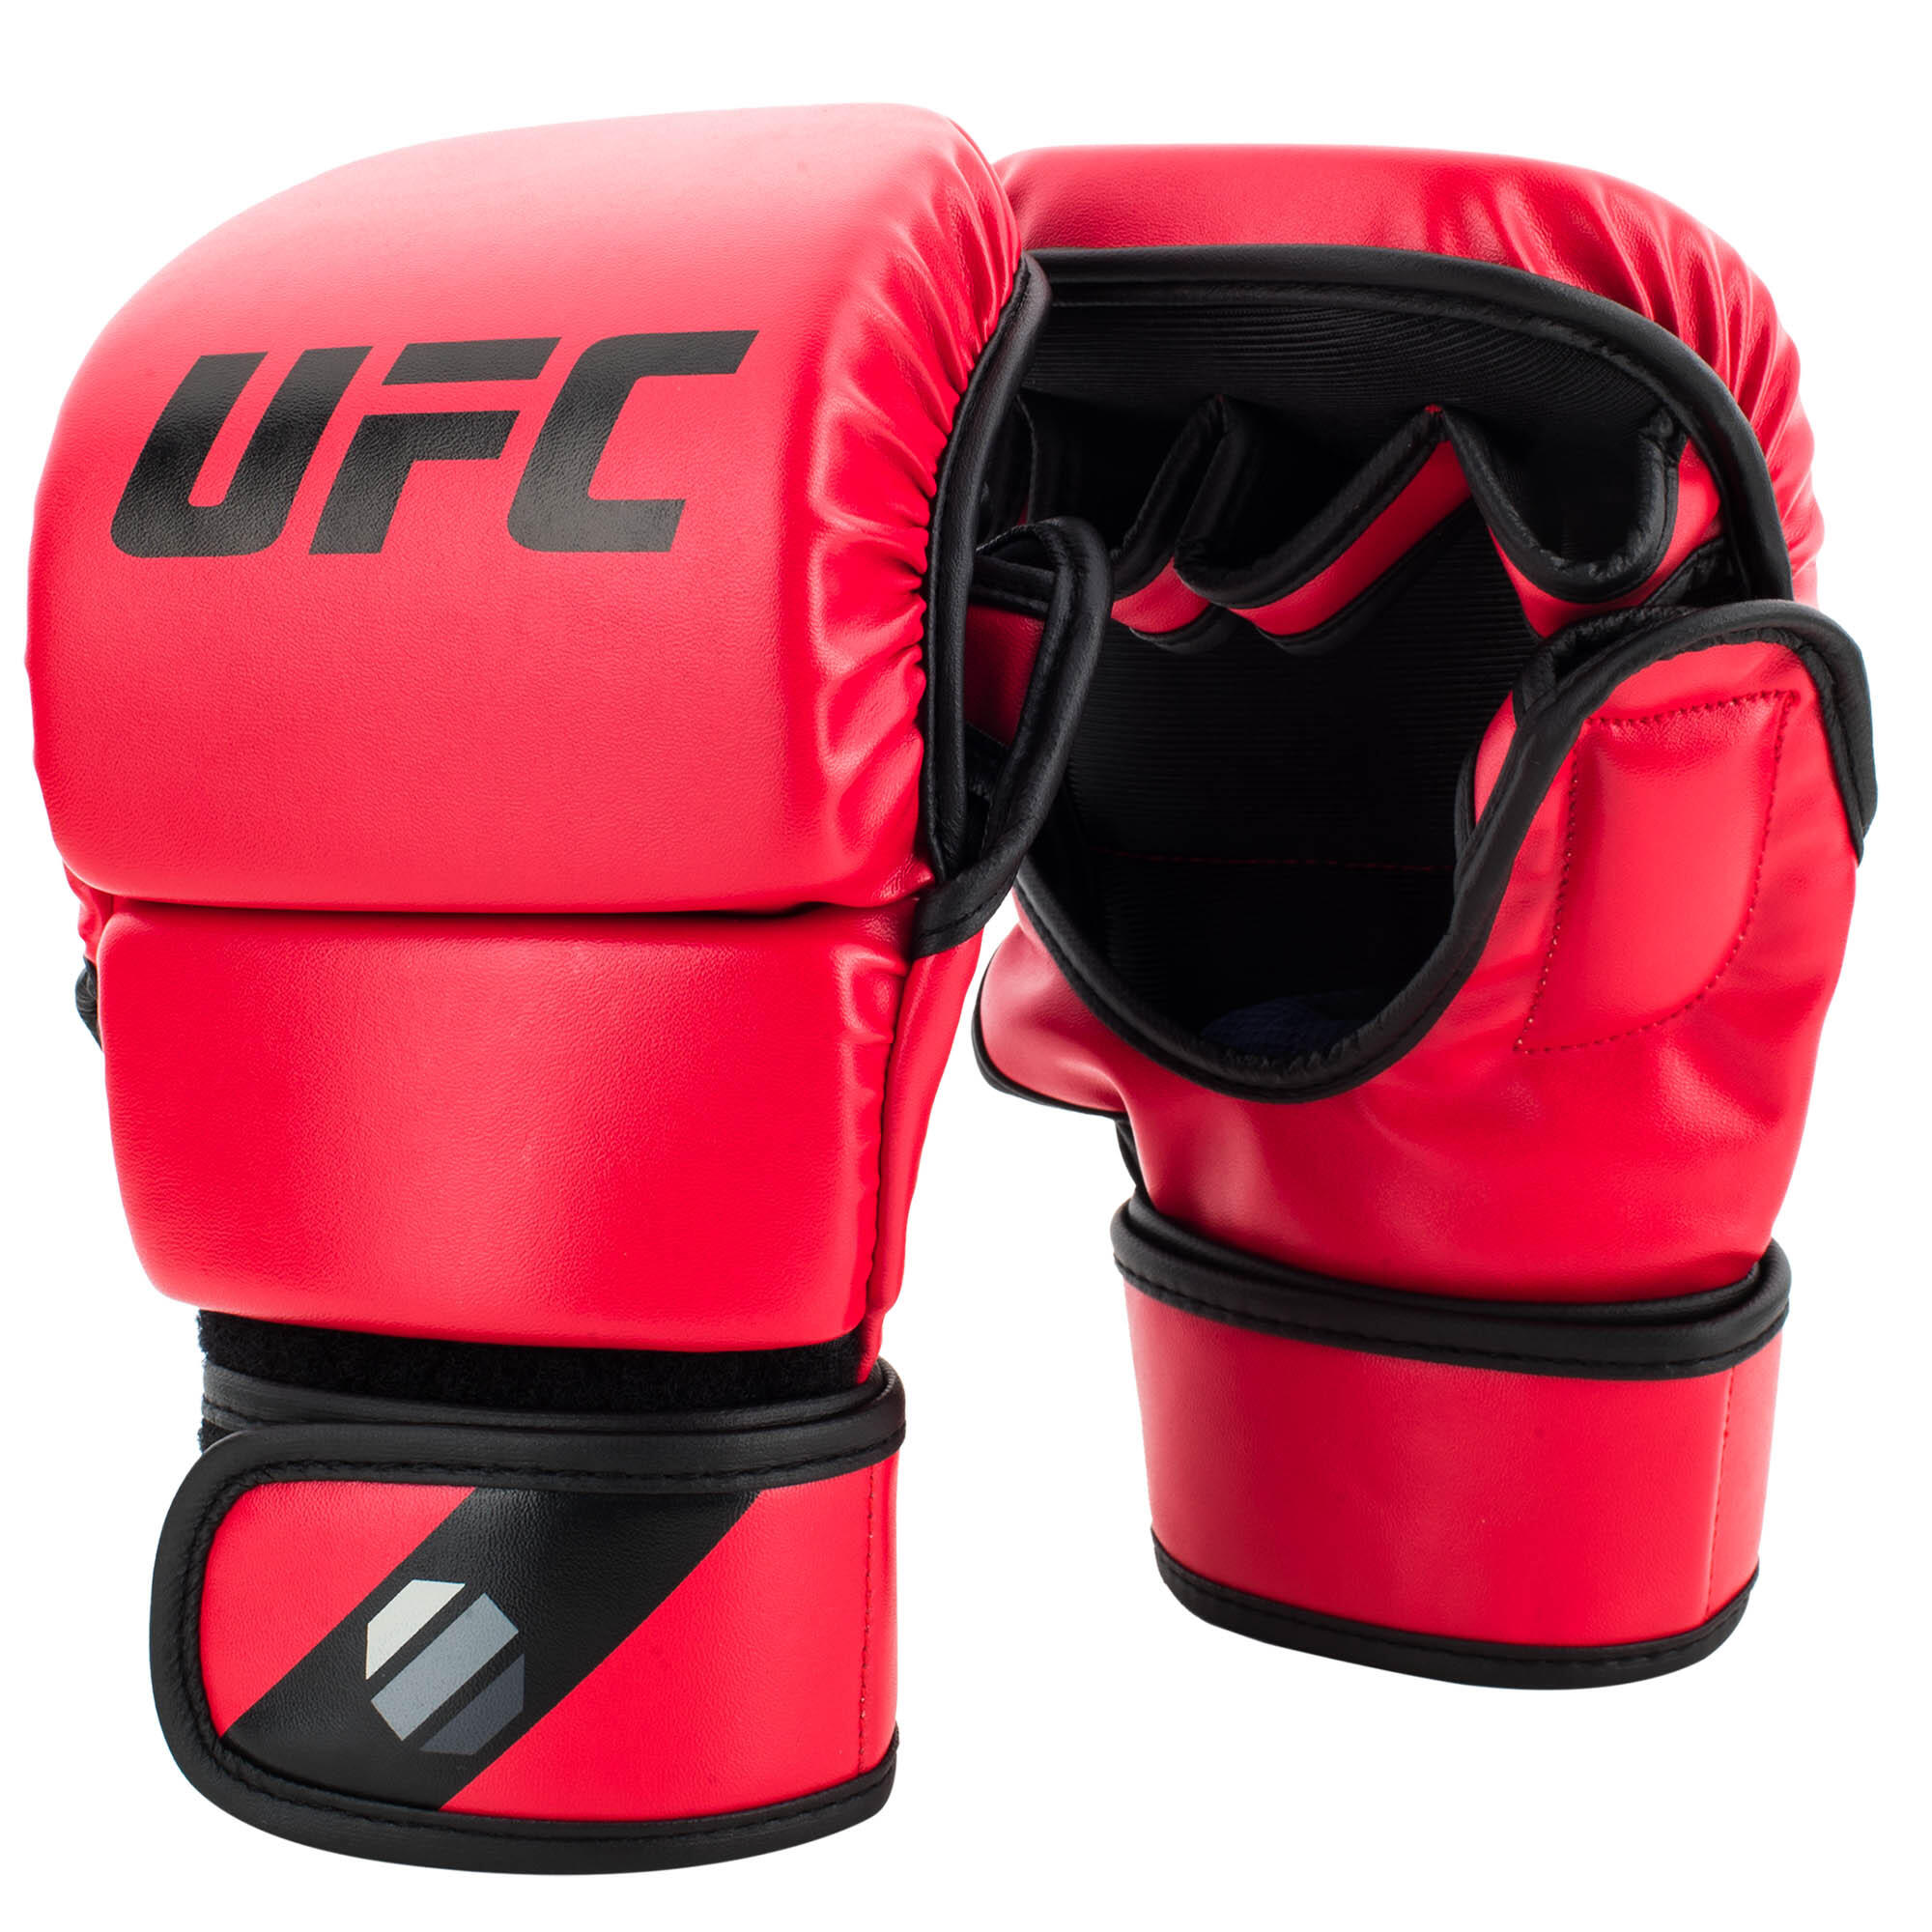 UFC UFC MMA 8oz Sparring Gloves - Red - L/XL